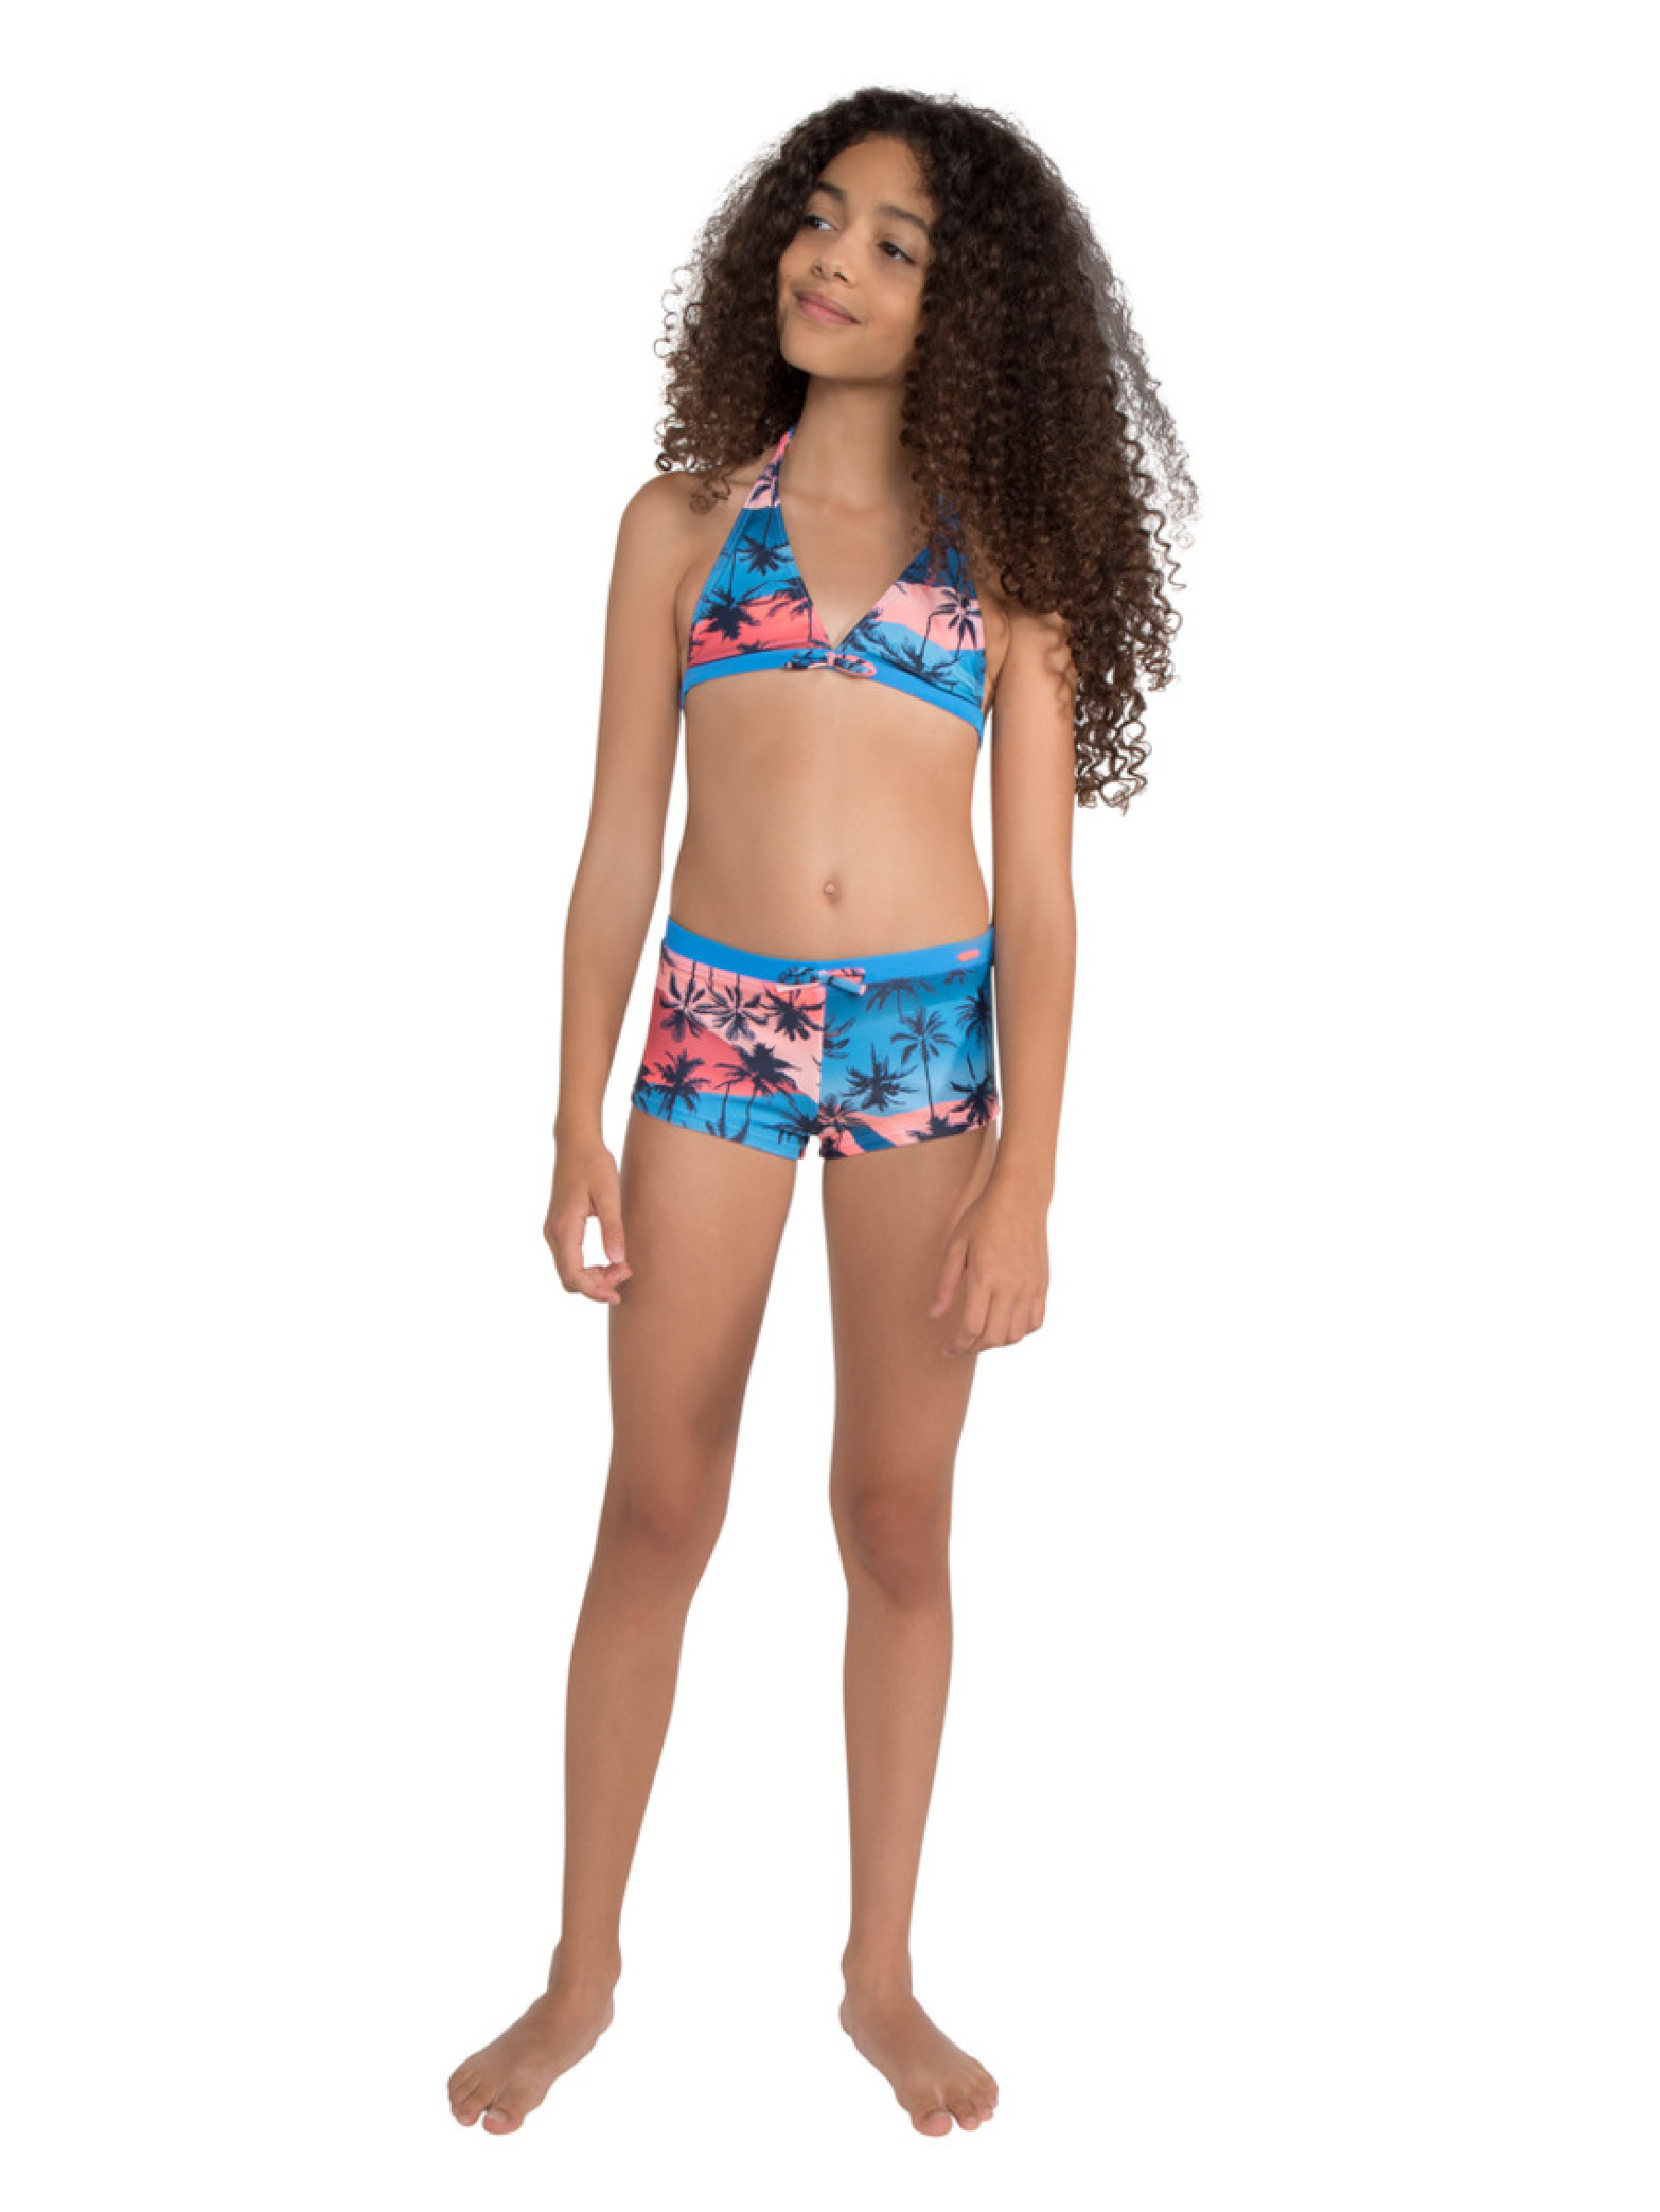 meisjes Koski 20 B Halter Bikini van Protest in de kleur Fiji in maat 176.